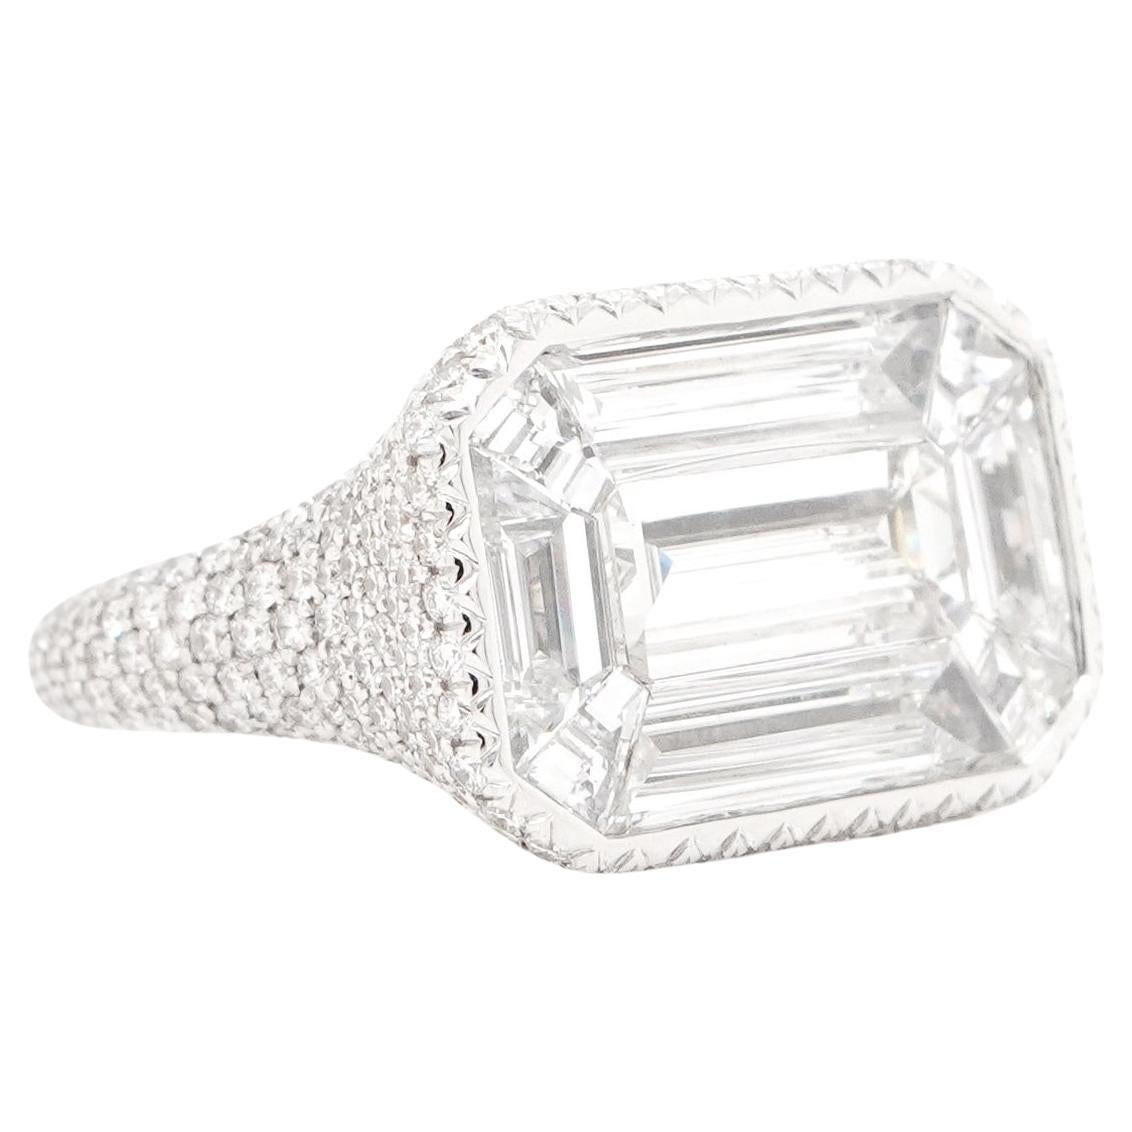 BENJAMIN FINE JEWELRY 3.05 cts Pie Cut Diamond 18K Ring For Sale